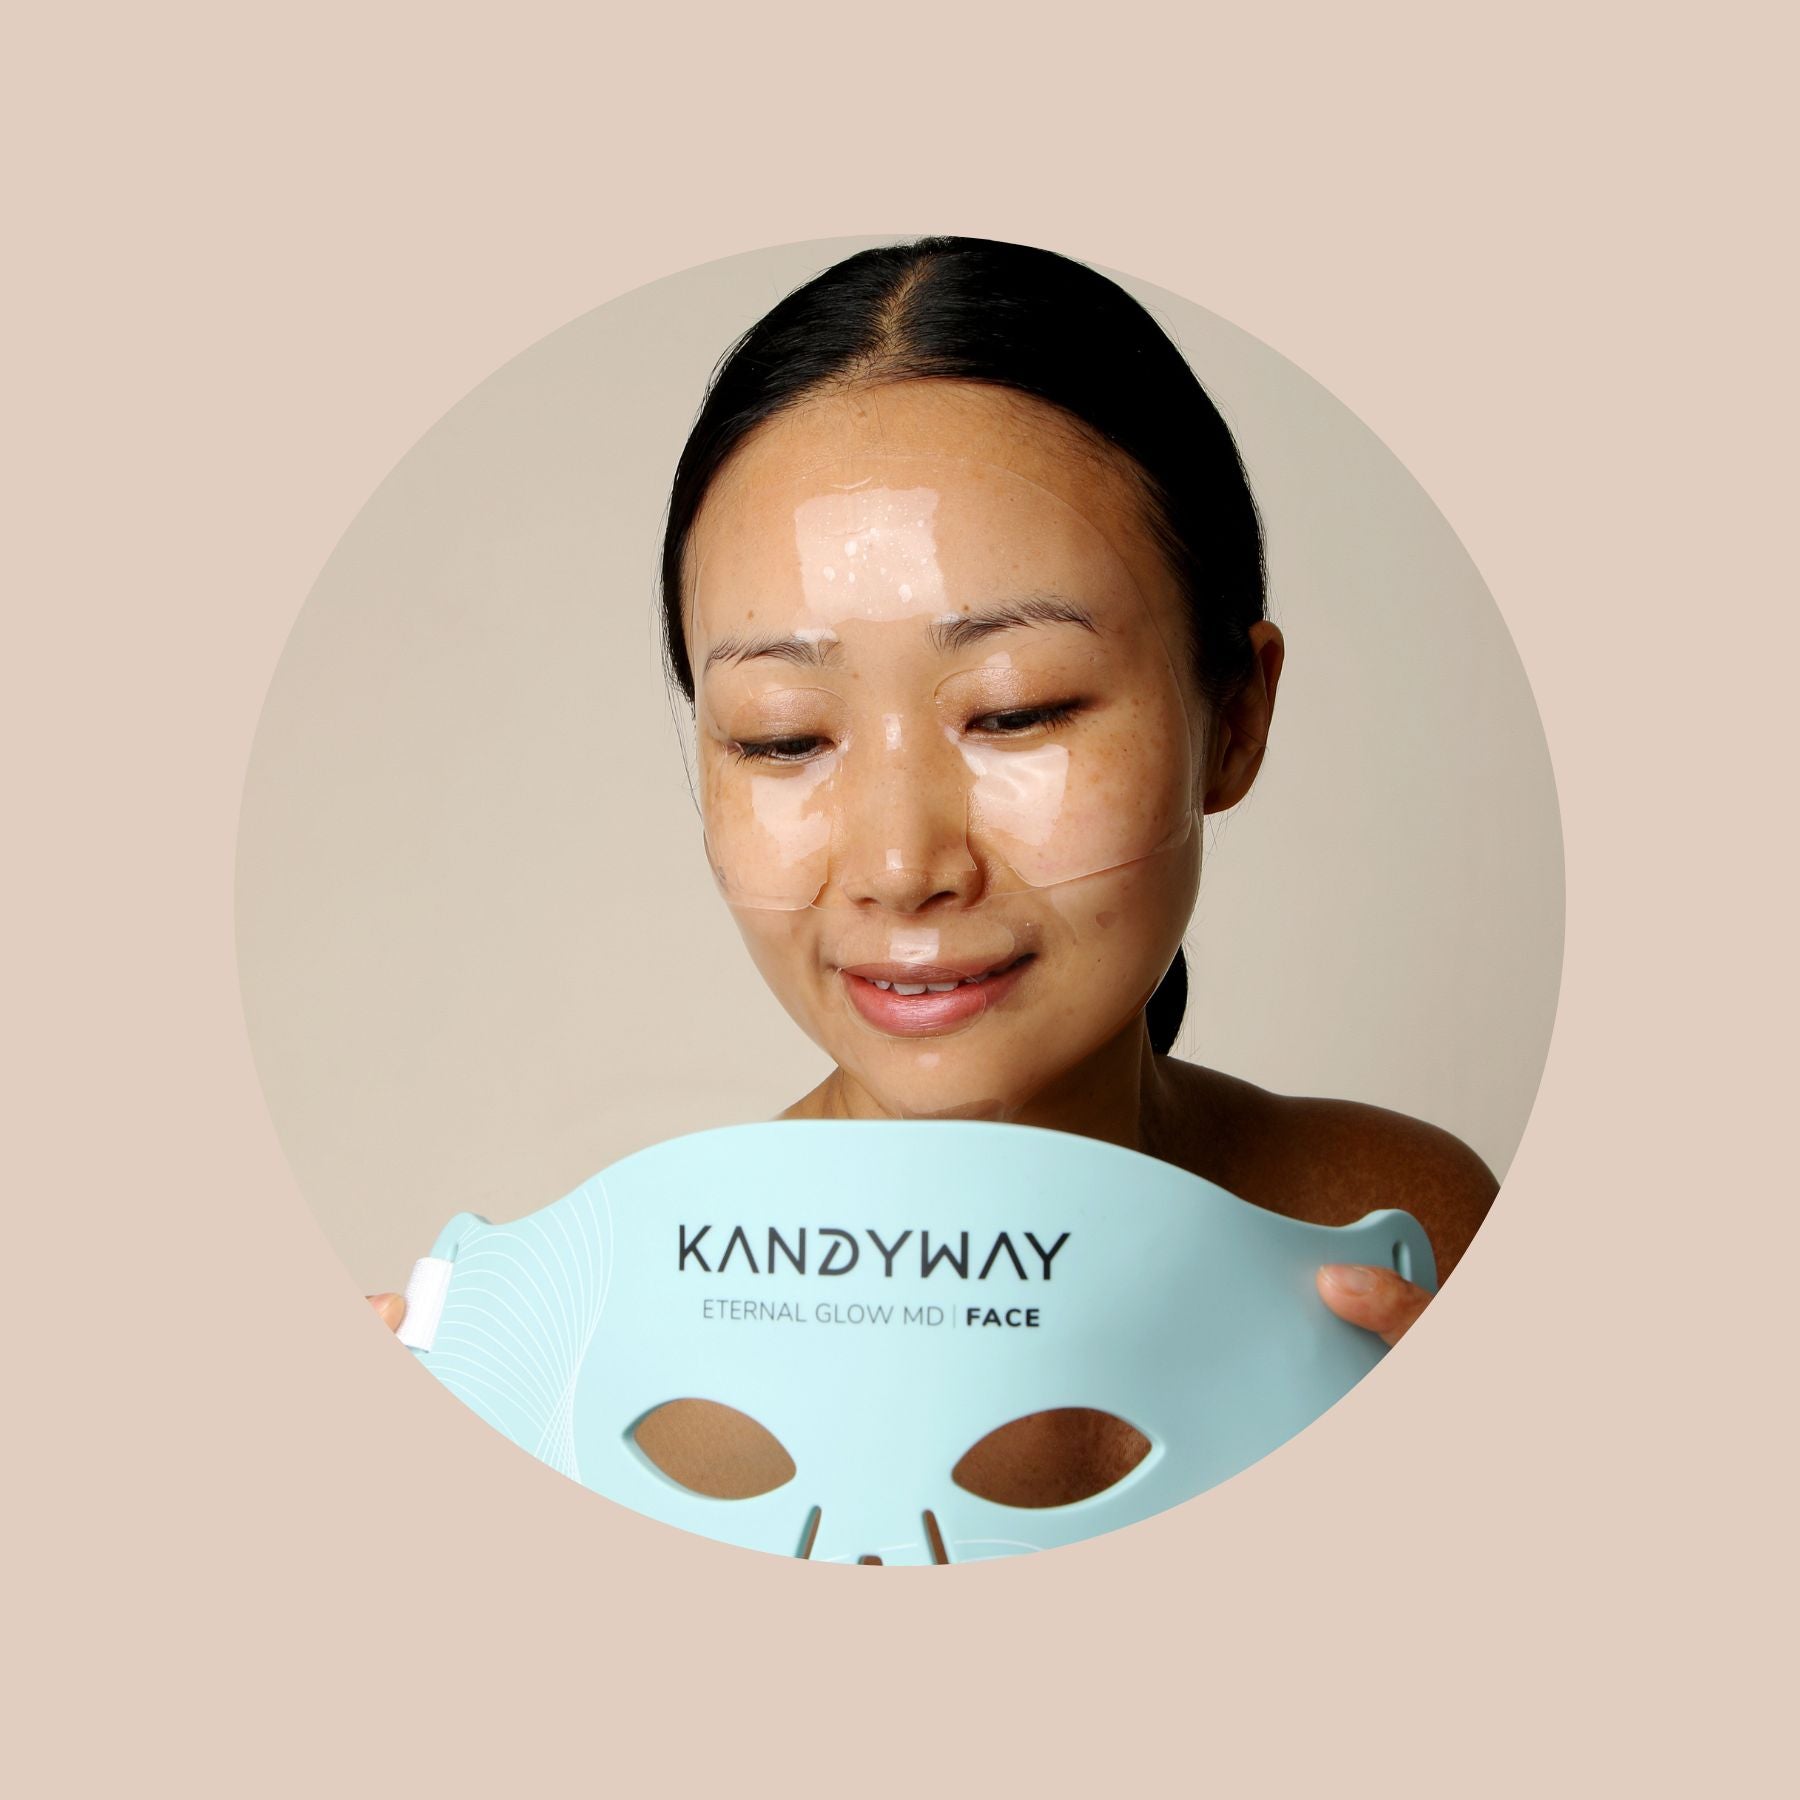 Looking at Kandyway LED Mask